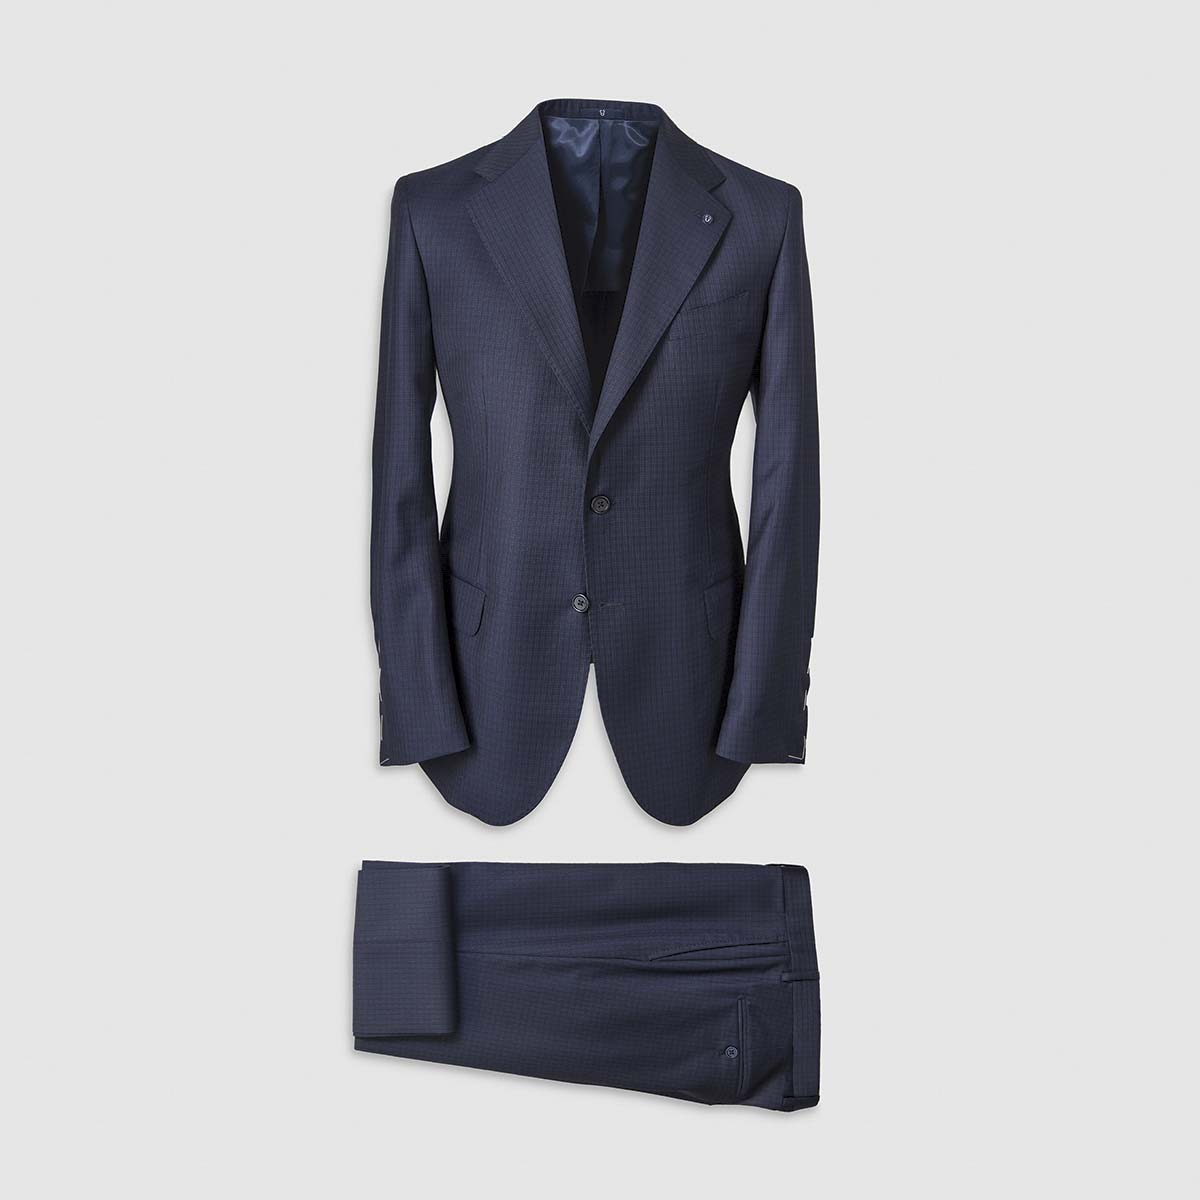 Blue Gingham Pattern Smart Suit in 130s Four Season Wool Melillo 1970 on sale 2022